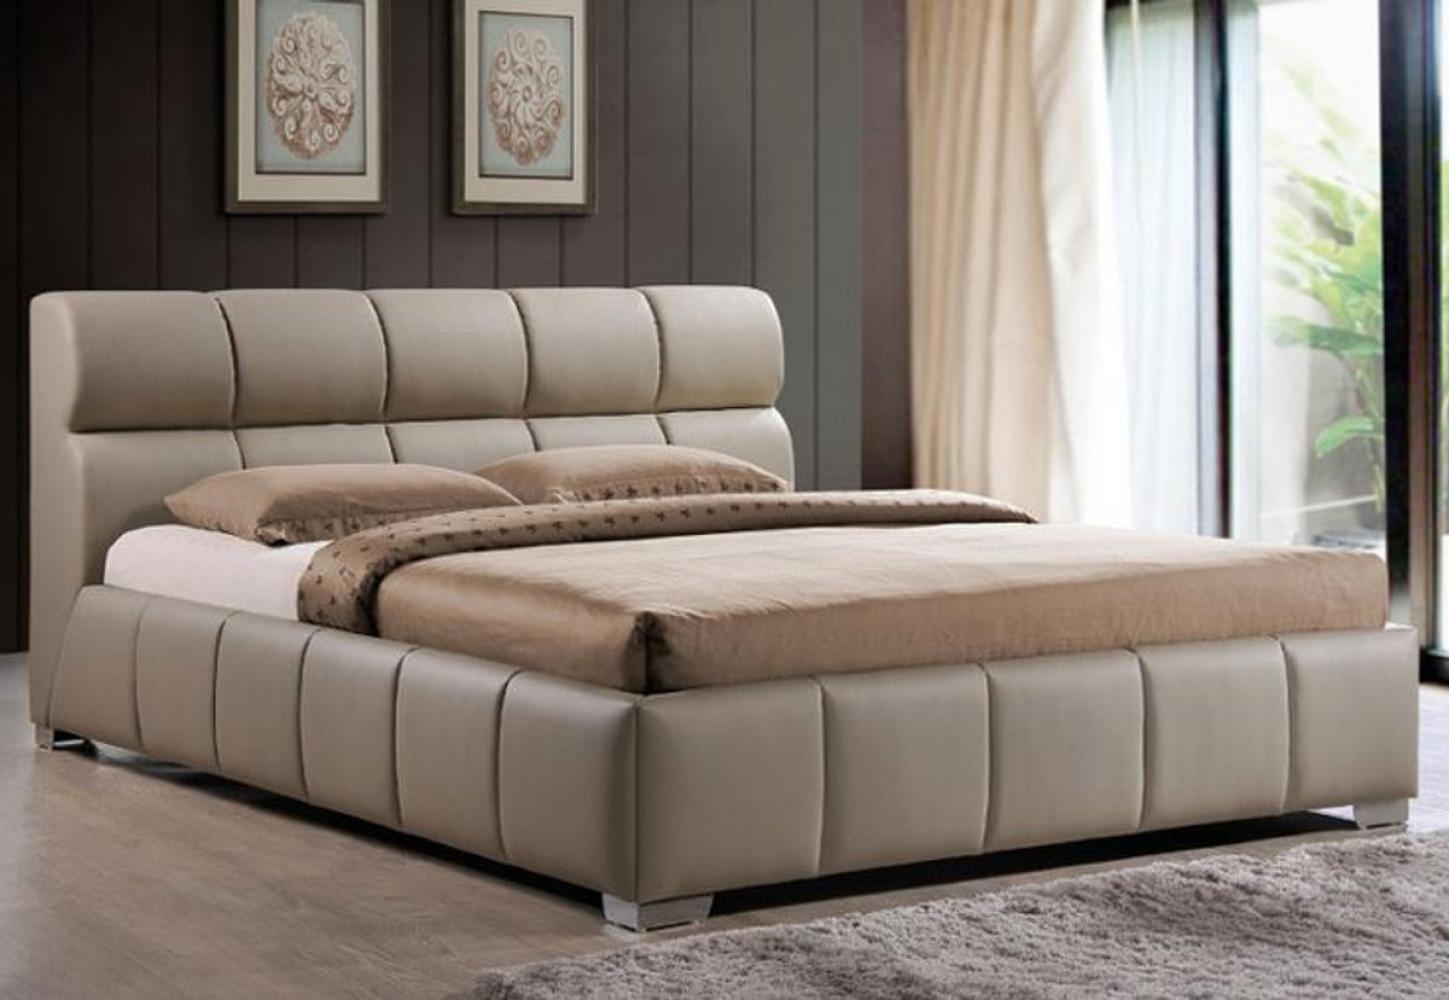 Casa Padrino Luxus Doppelbett Cappucciono 176 x 237 x H. 93 cm - Massivholz Bett mit Kunstleder - Schlafzimmer Möbel Bild 1